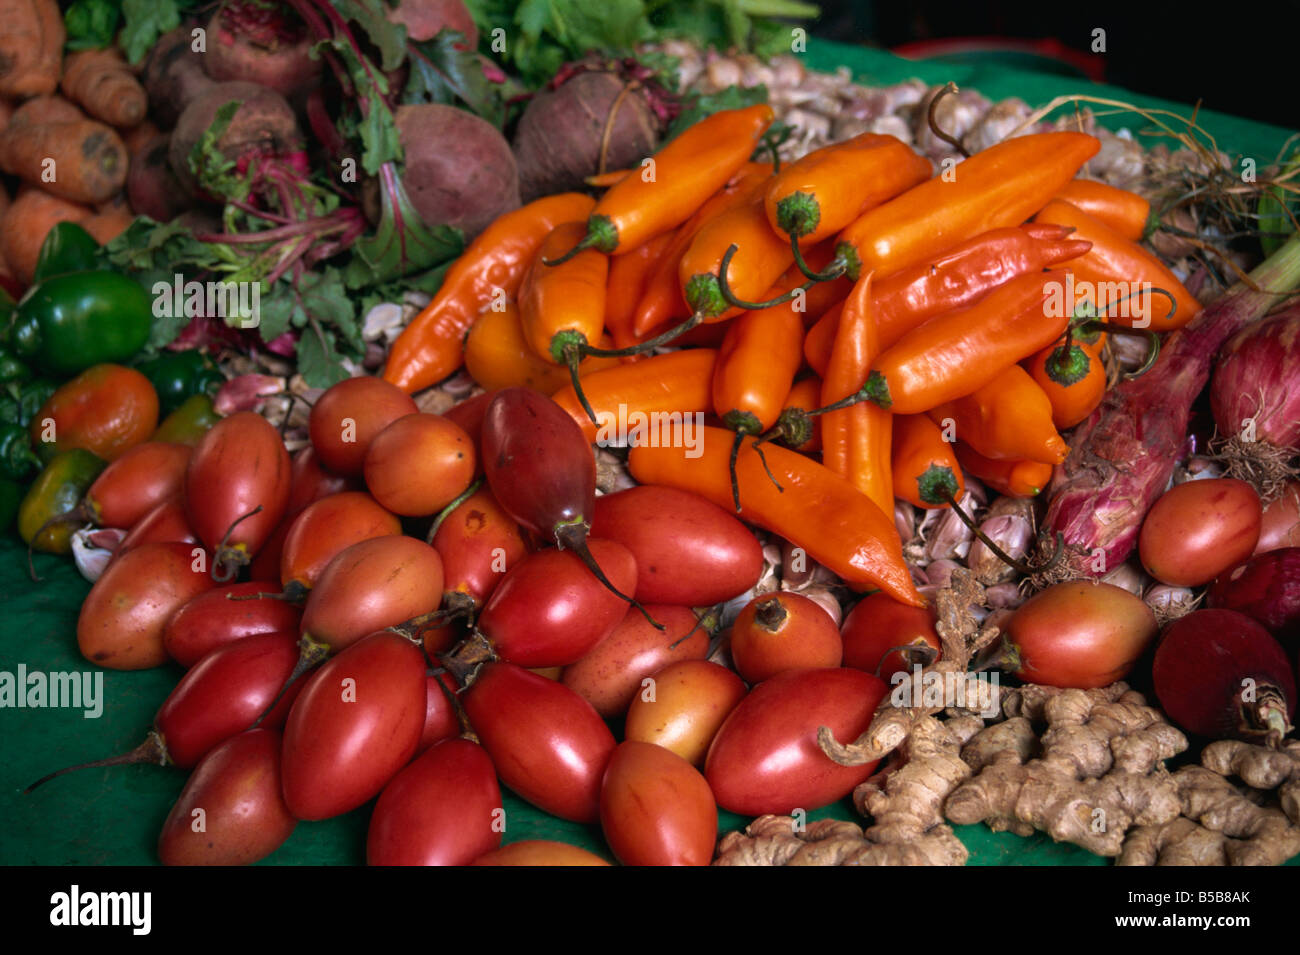 Vegetables for sale, Pisac Market, Cuzco area, Peru, South America Stock Photo